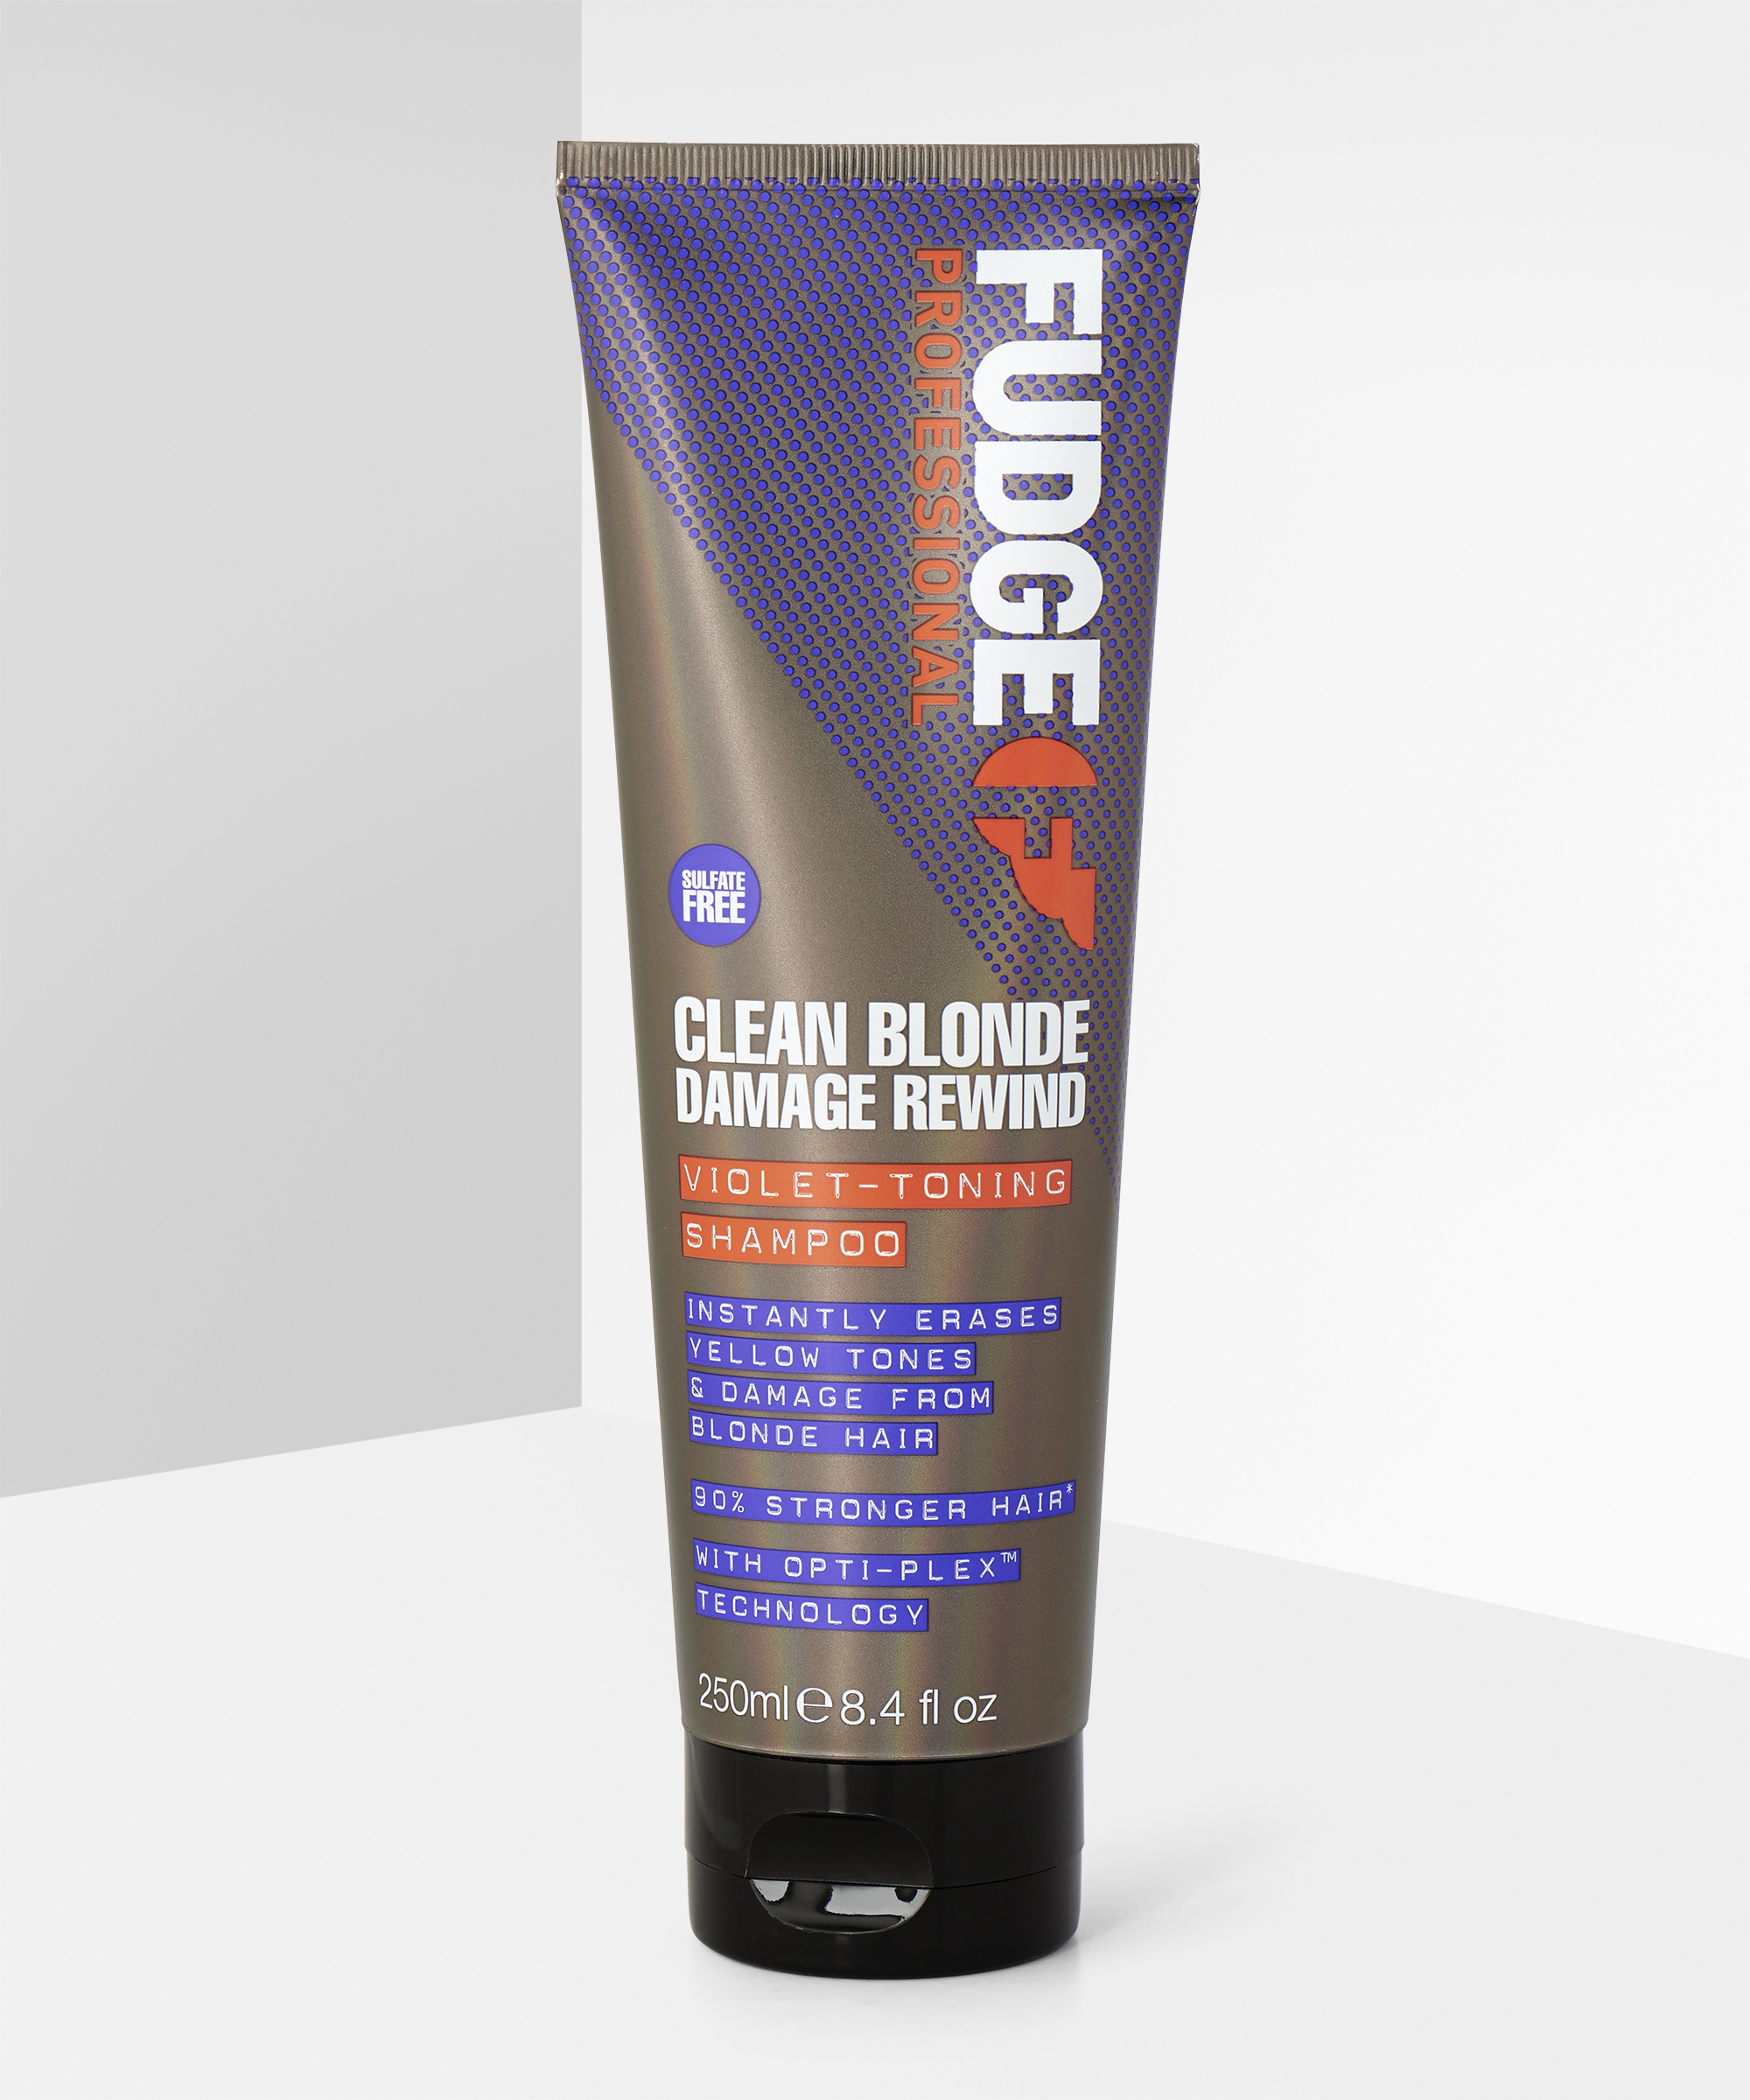 Shampoo at BEAUTY Clean Blonde Fudge Rewind Damage BAY Professional